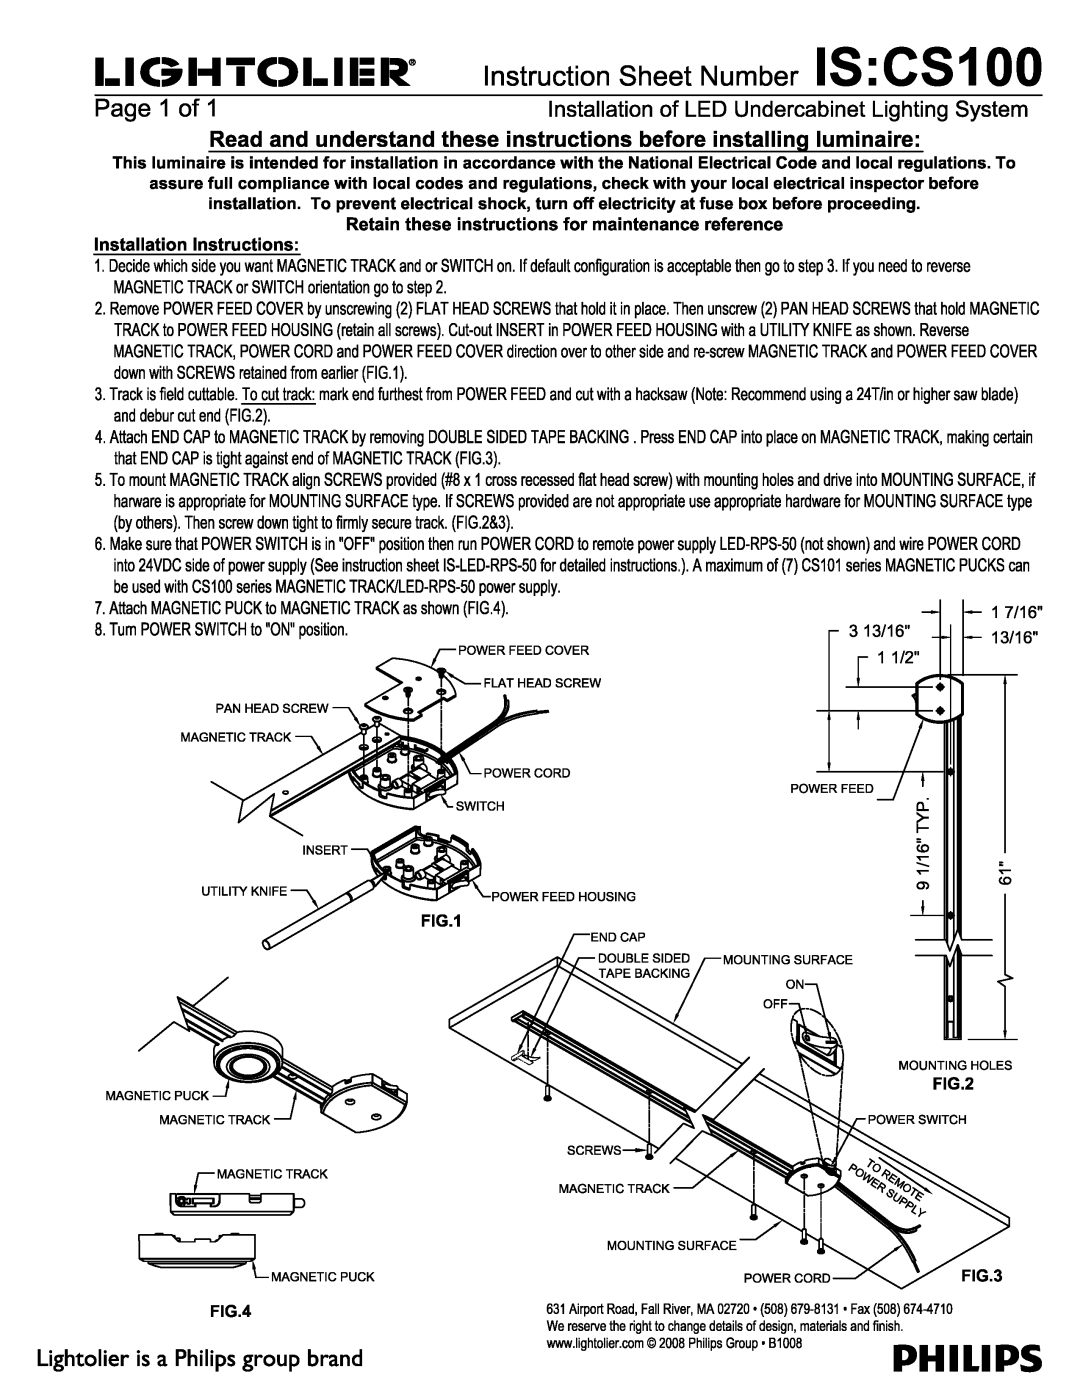 Lightolier IS:CS100 manual 